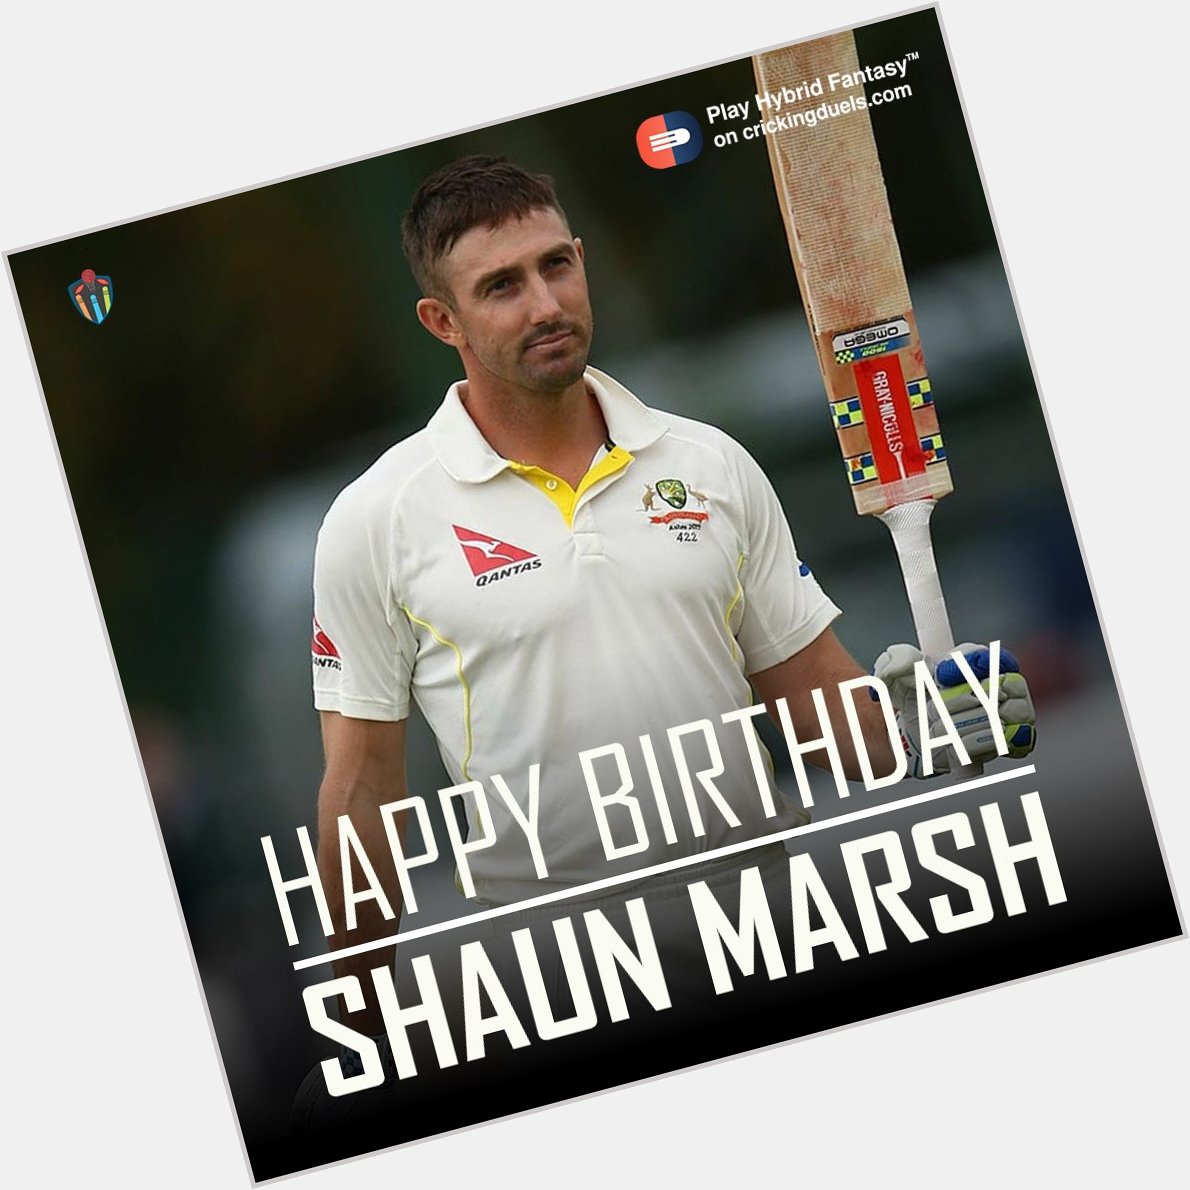 Happy Birthday Shaun Marsh. The Australian cricketer turns 34 today. 